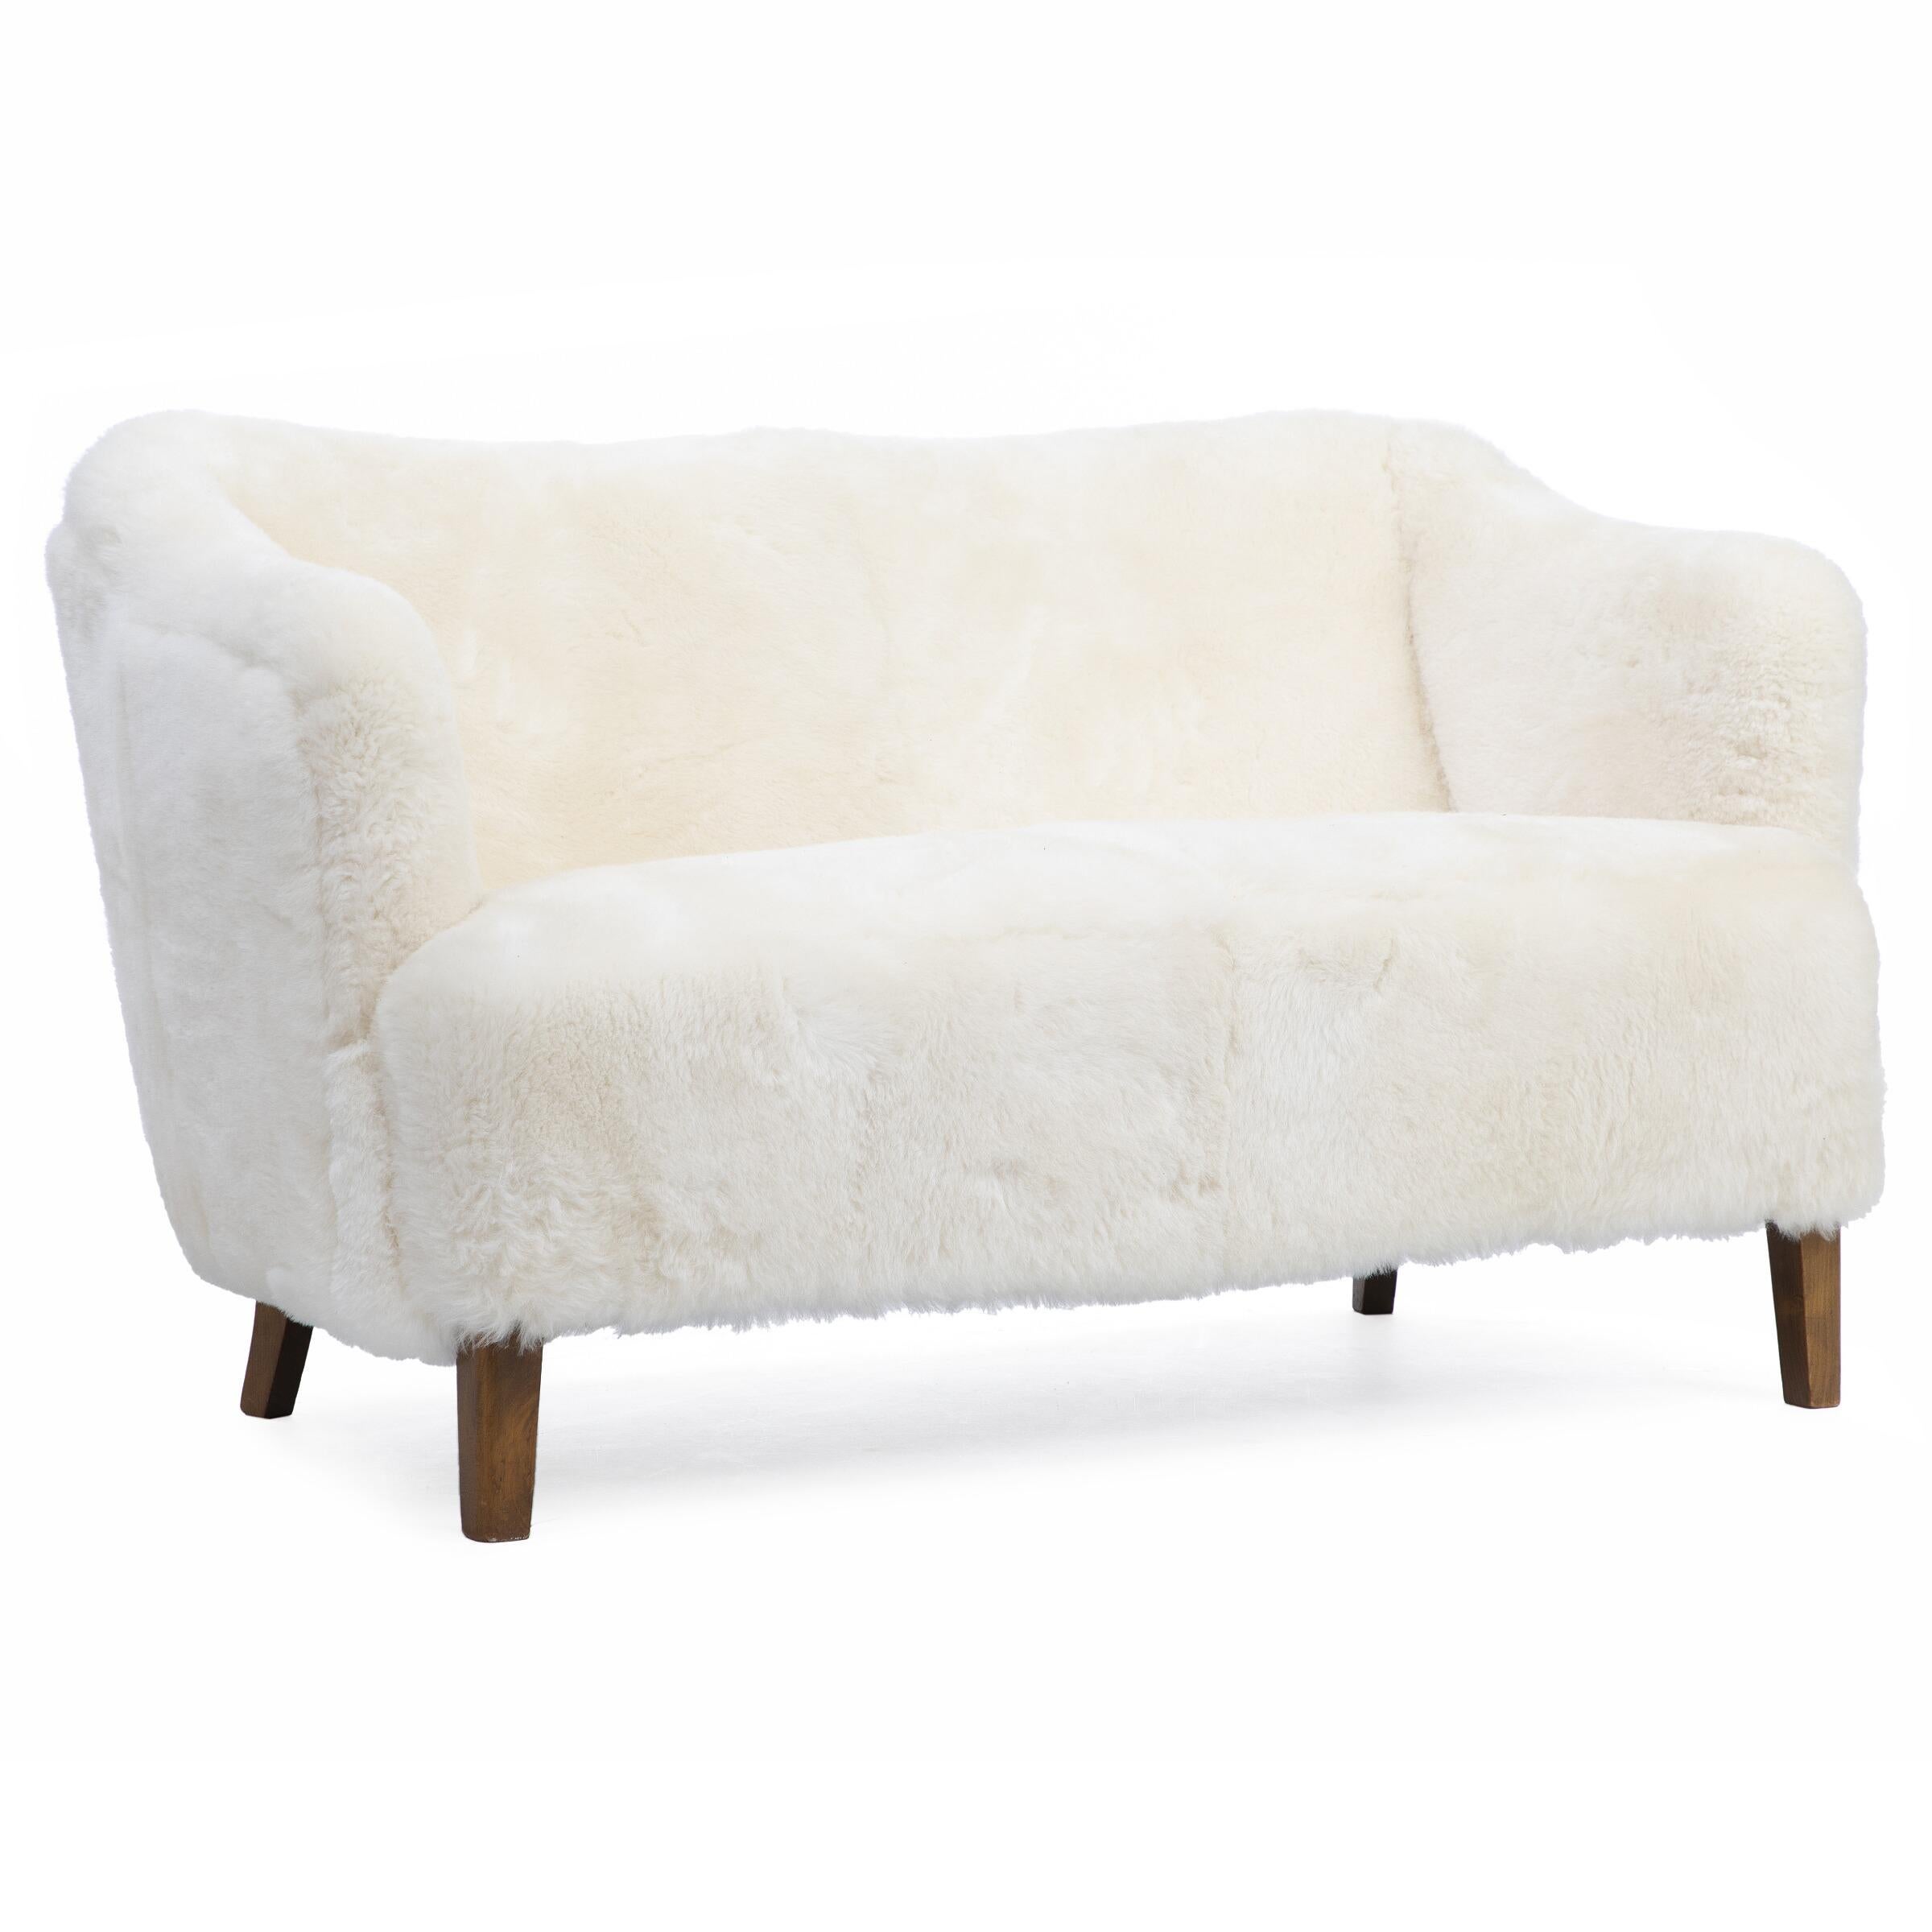 Scandinavian Modern Danish Love Seat, Soft Lambswool, 1940s For Sale